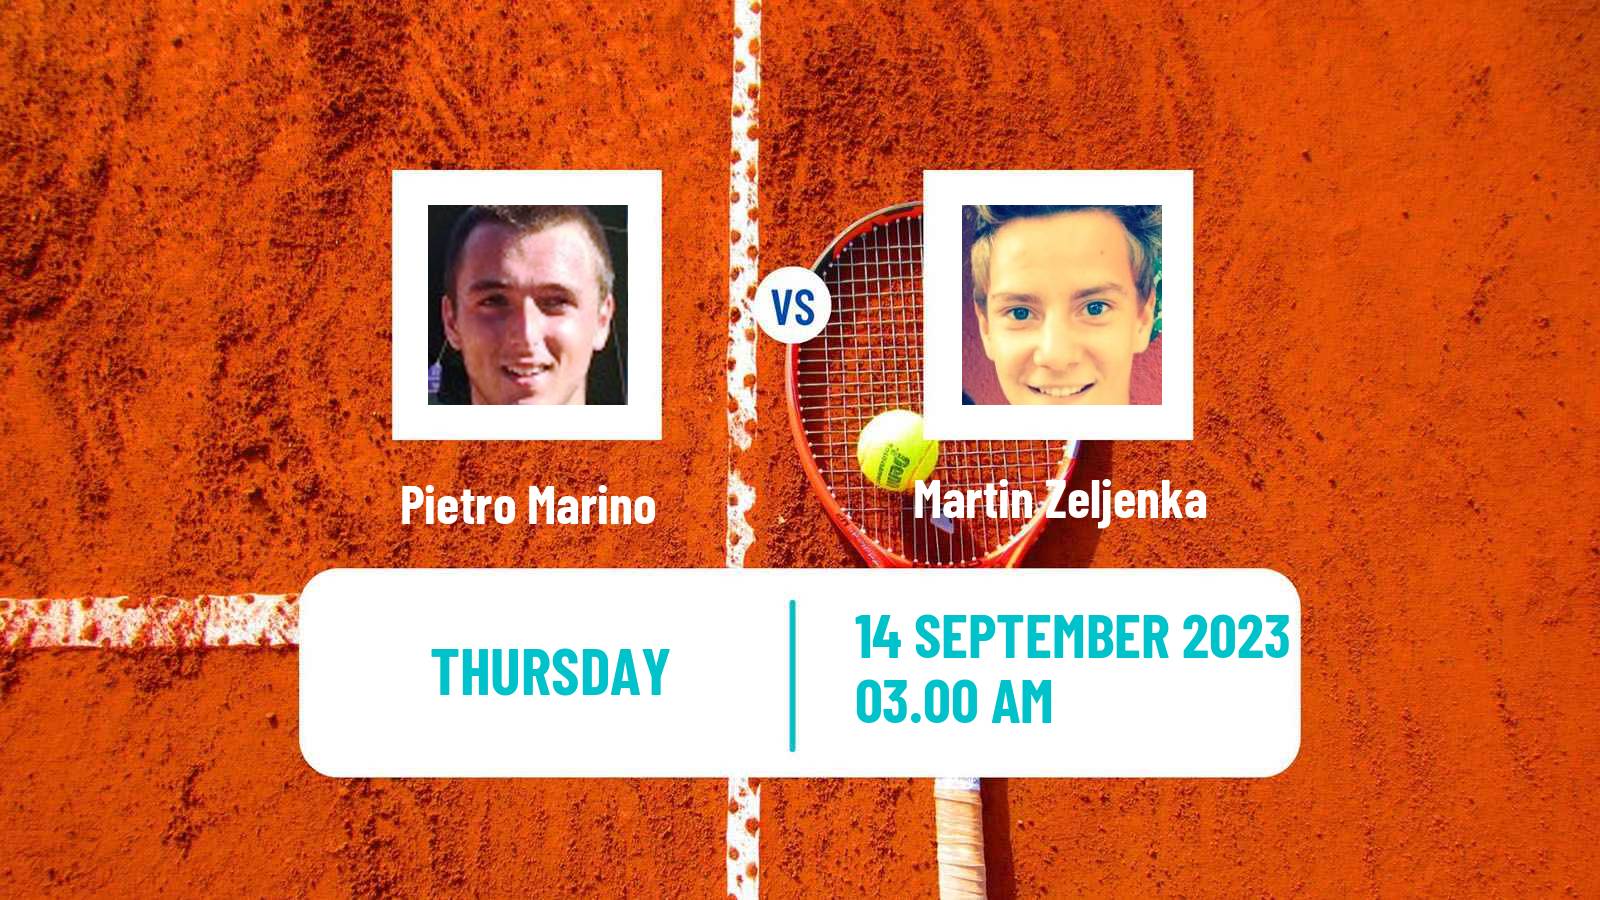 Tennis ITF M15 Satu Mare Men Pietro Marino - Martin Zeljenka